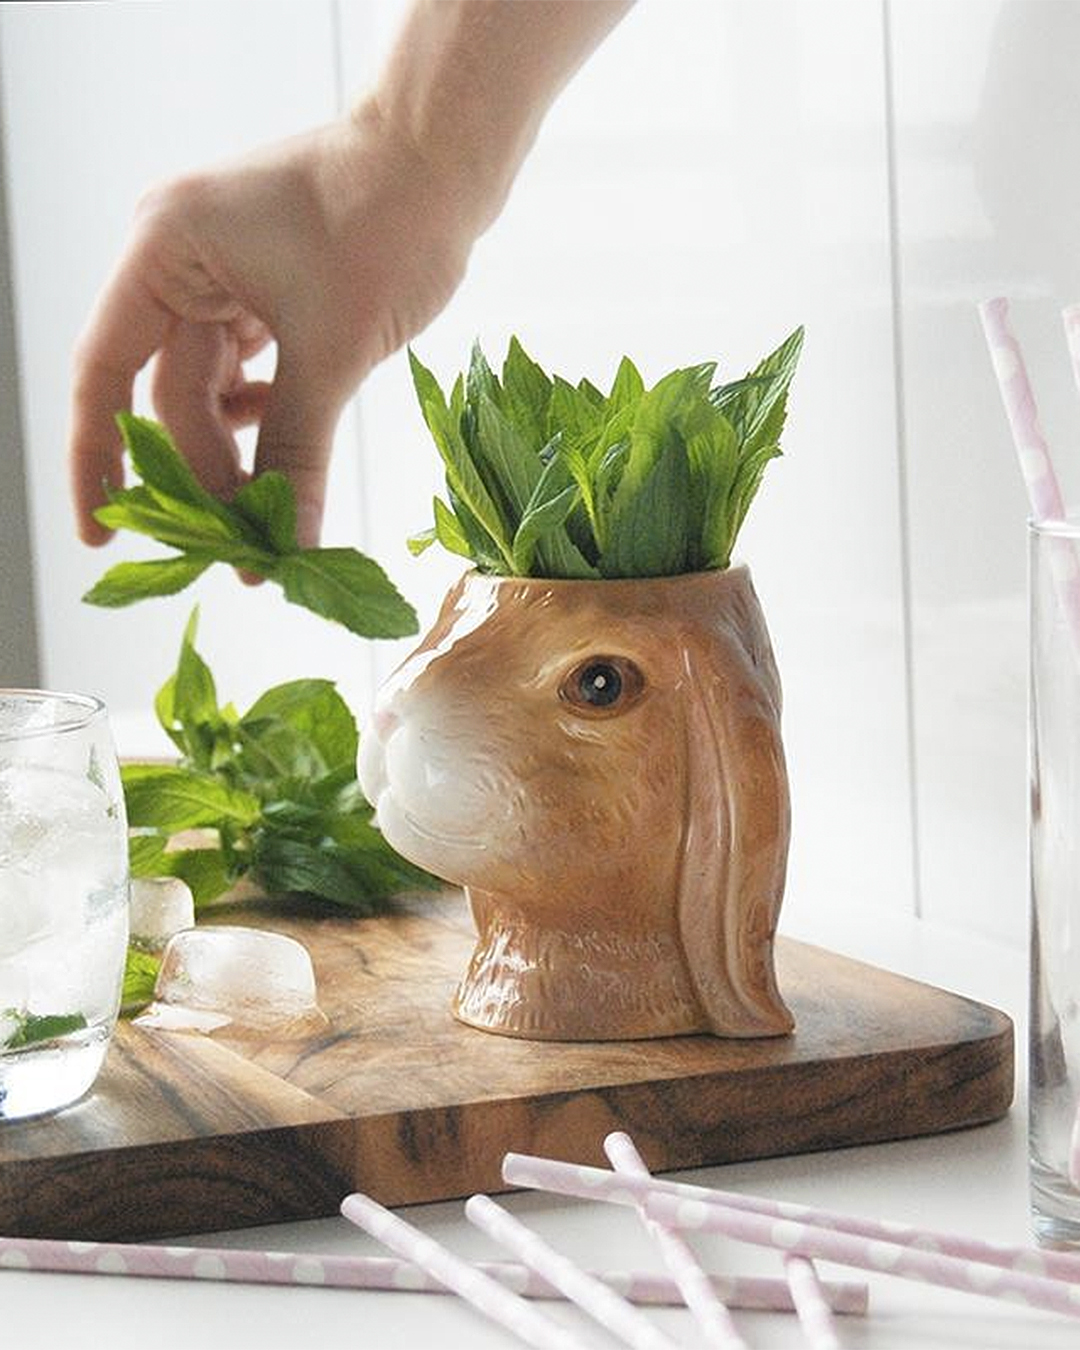 A cute rabbit head planter from Shut The Front Door.